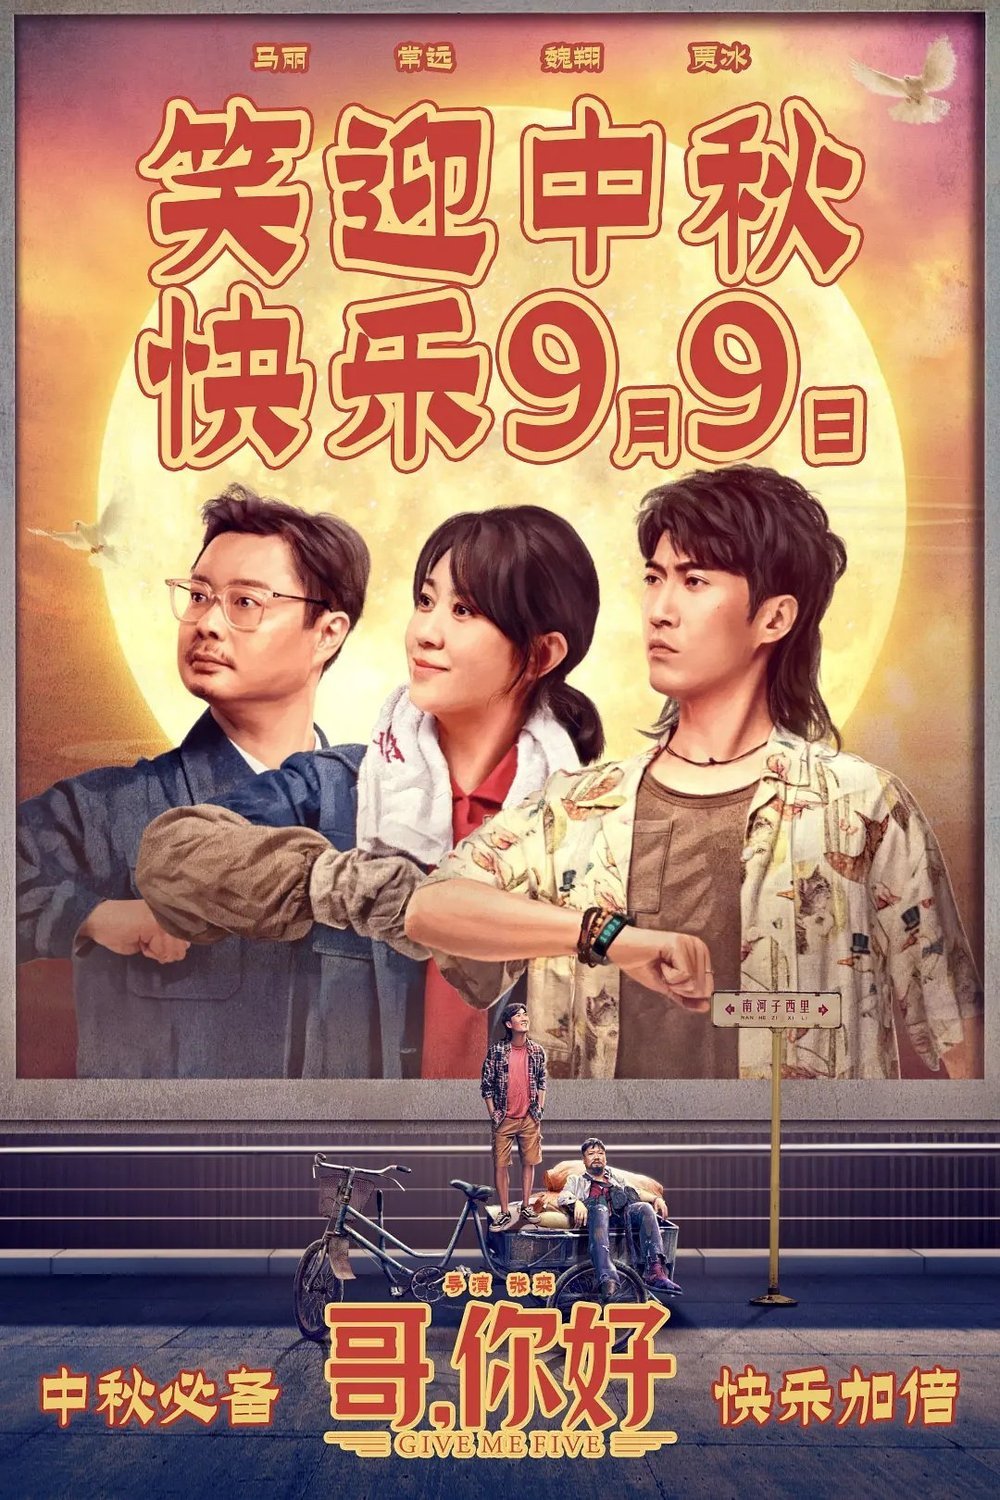 Mandarin poster of the movie Ge, ni hao